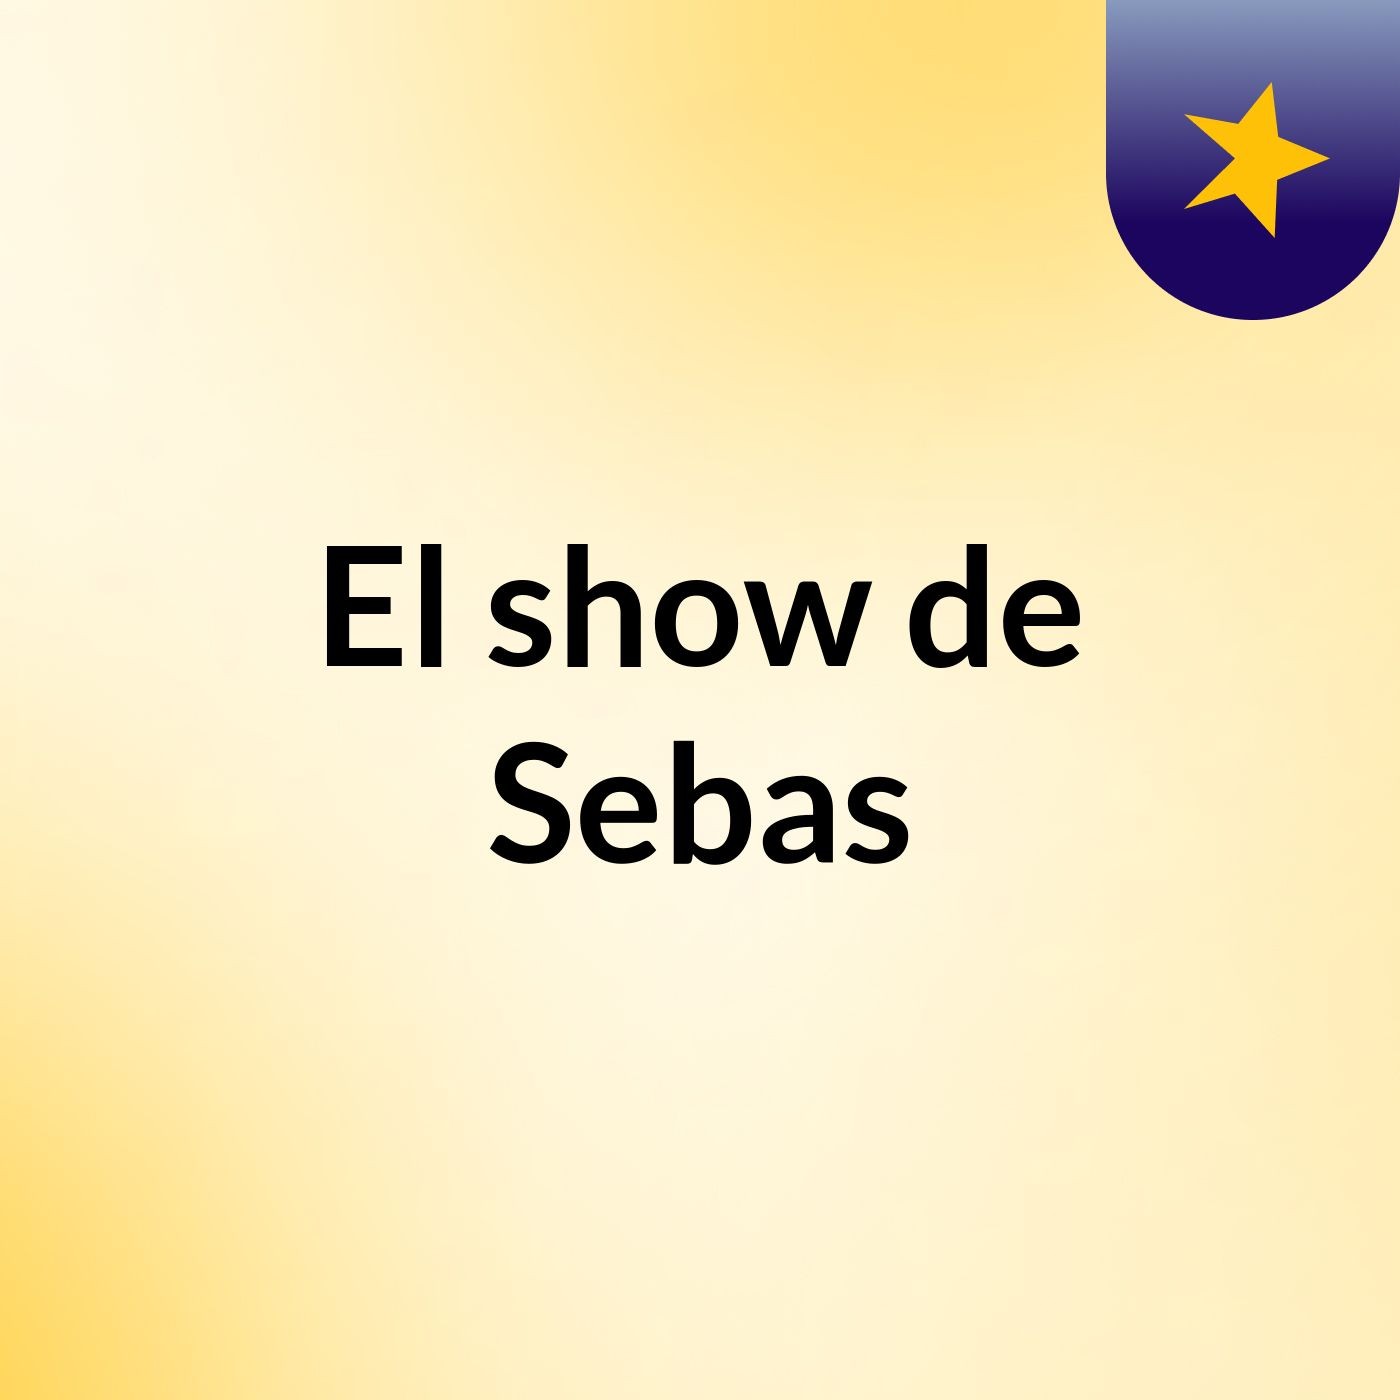 El show de Sebas